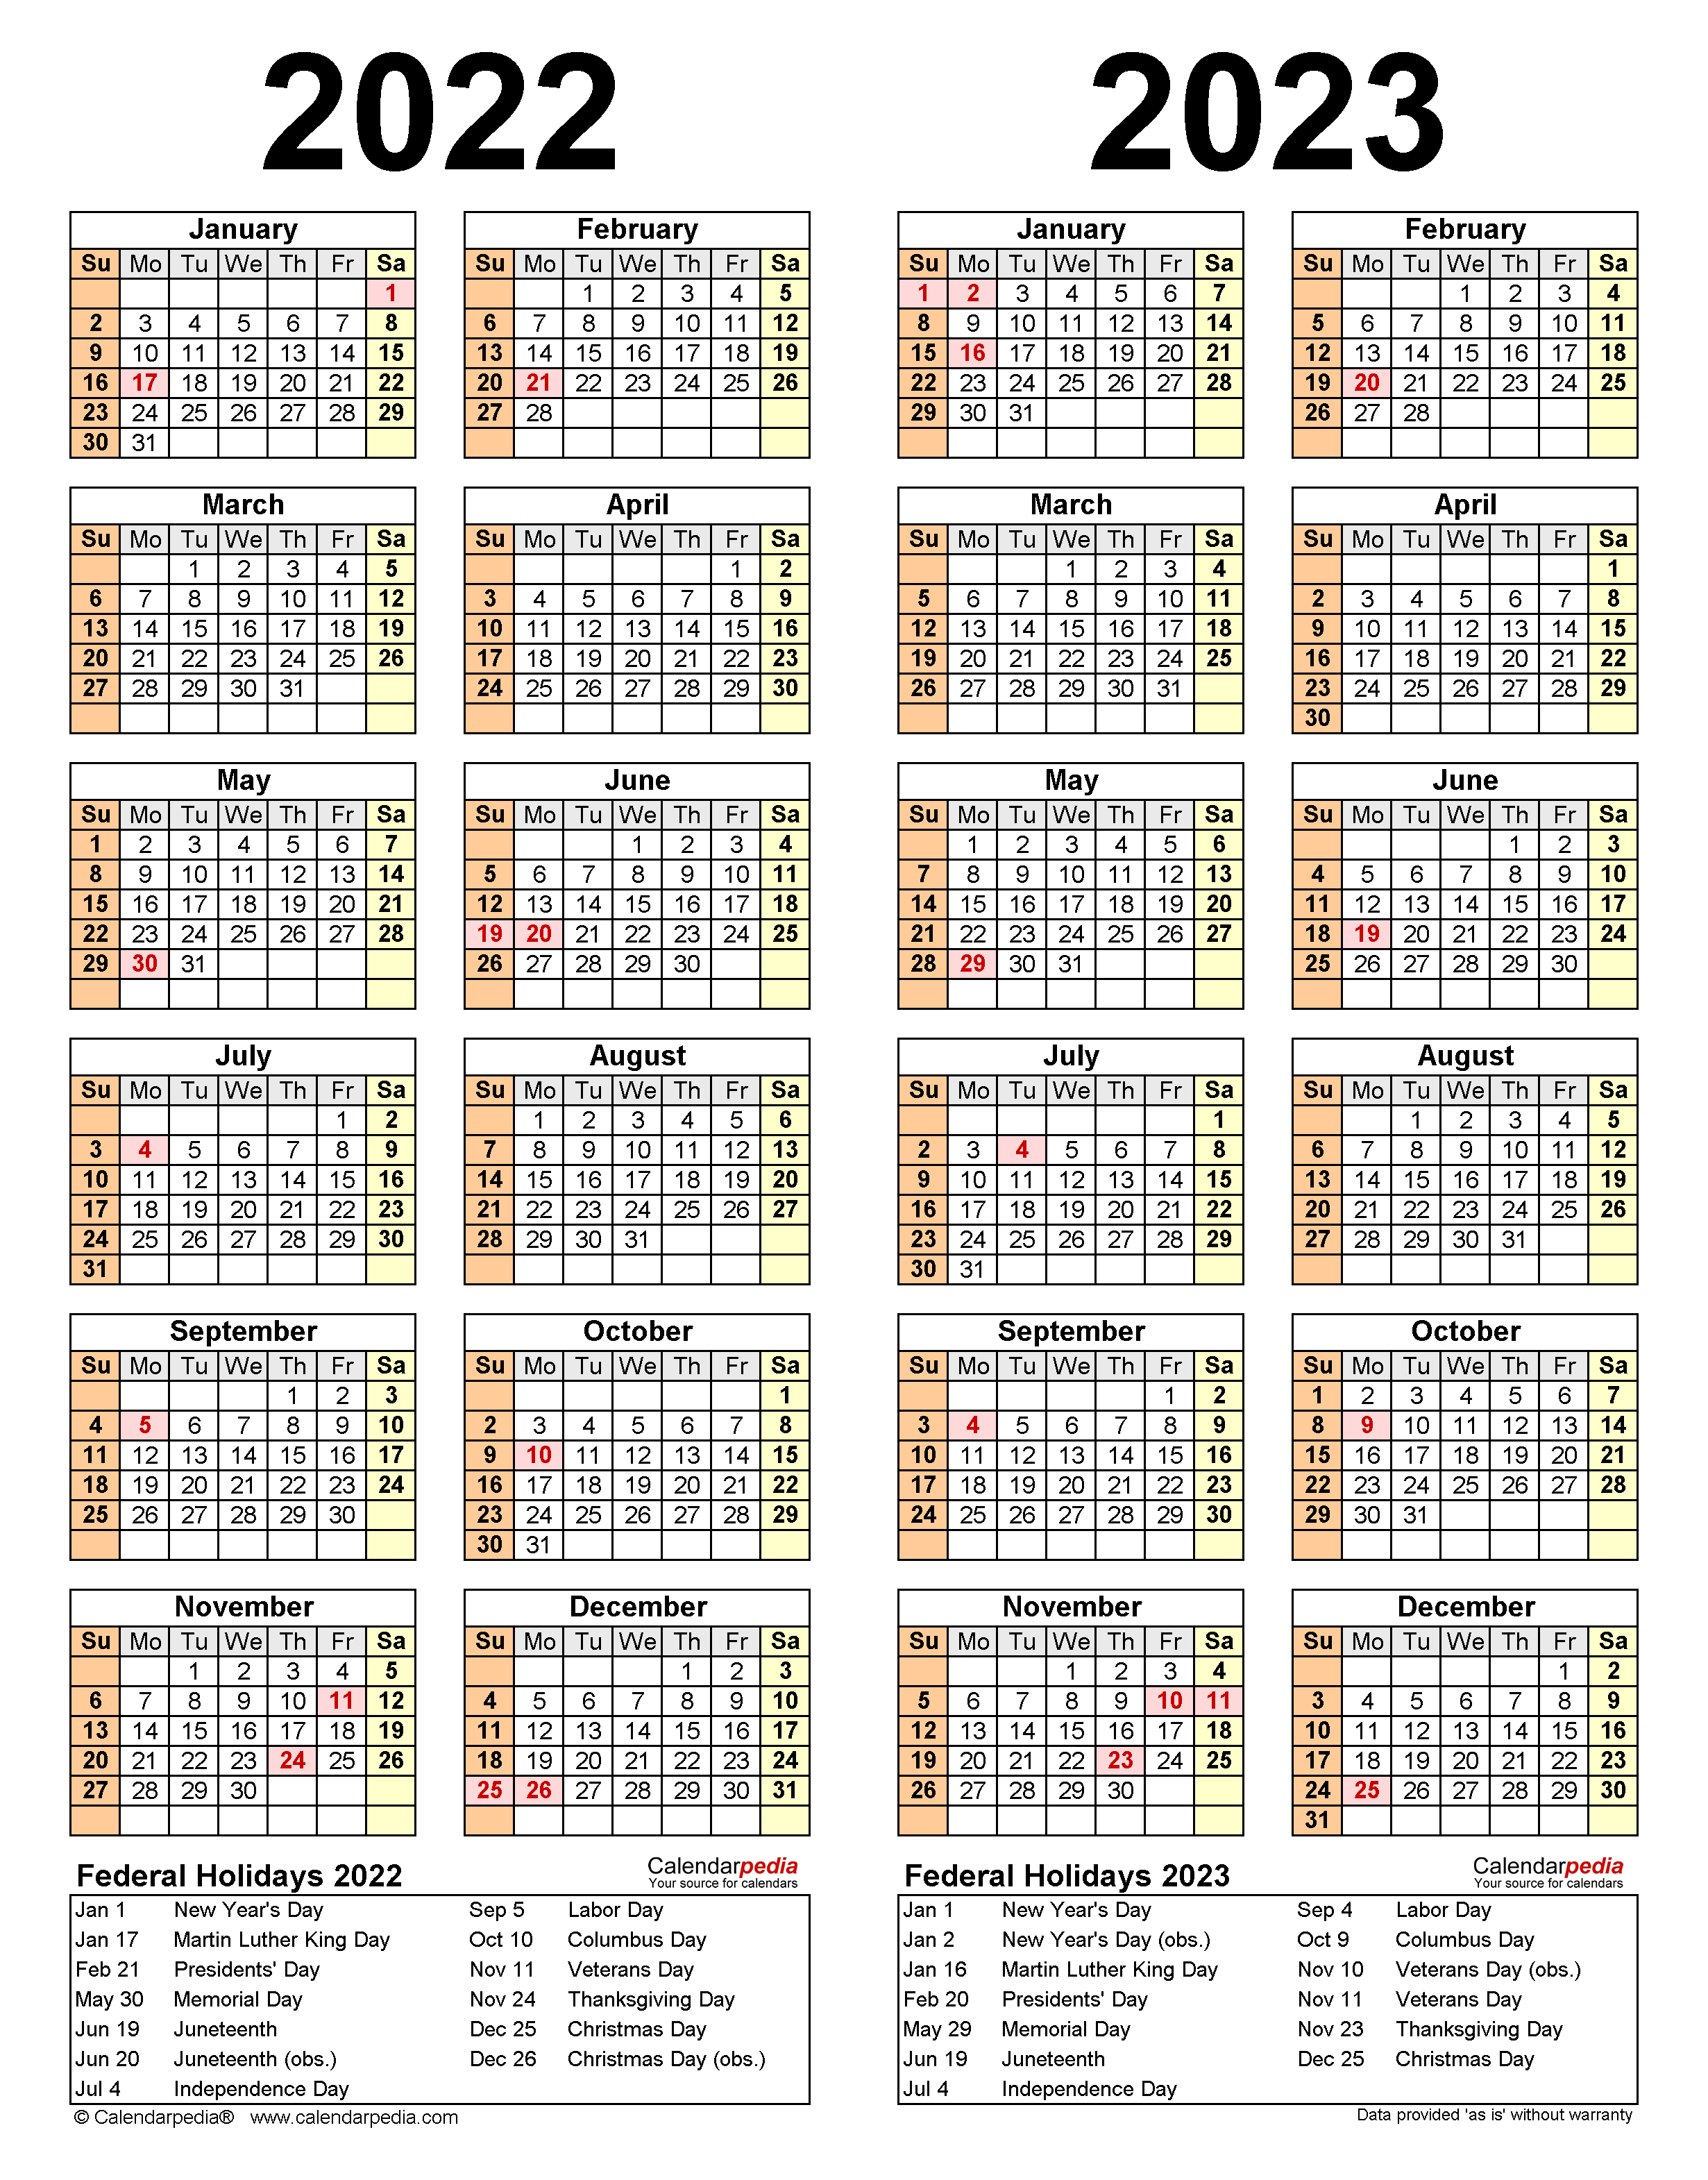 cu-boulder-academic-calendar-spring-2024-free-dyana-sybila